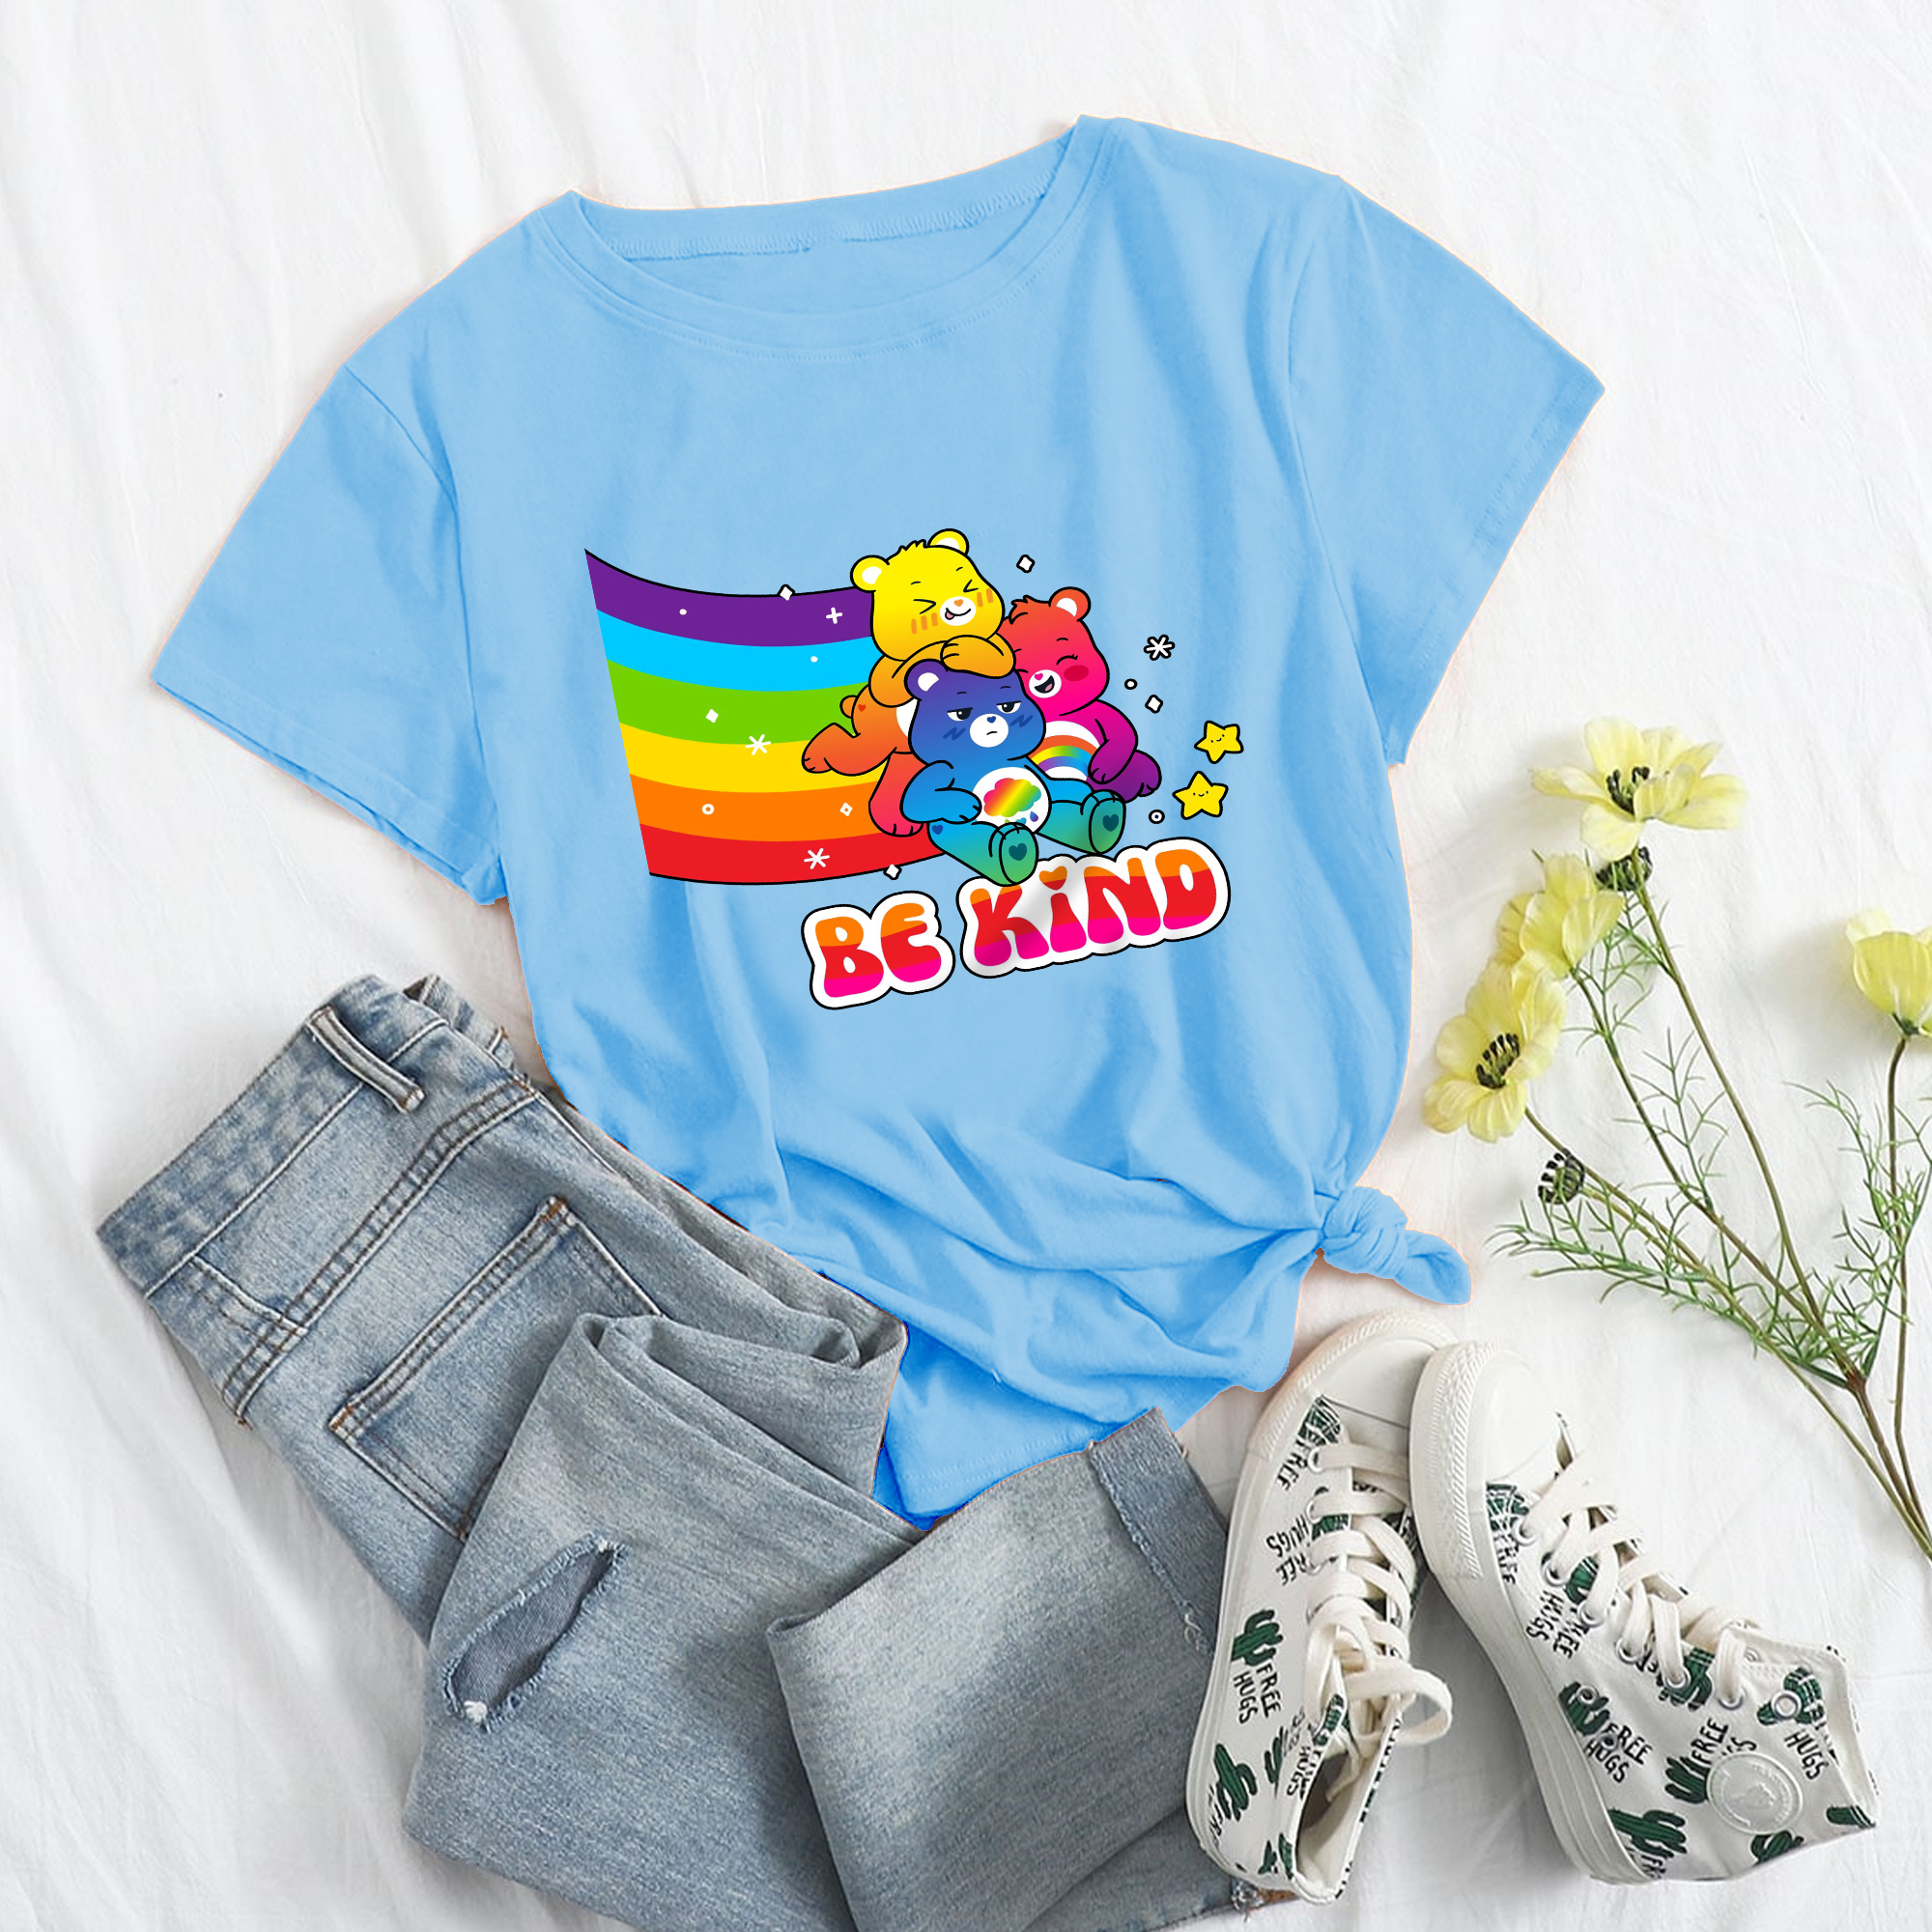 Care Bears Be Kinds Shirt, Care Bears LGBT Shirt, Care Bears Rainbow Shirt, LGBT Shirt, Anti-Racism Shirt, Kindness Shirt